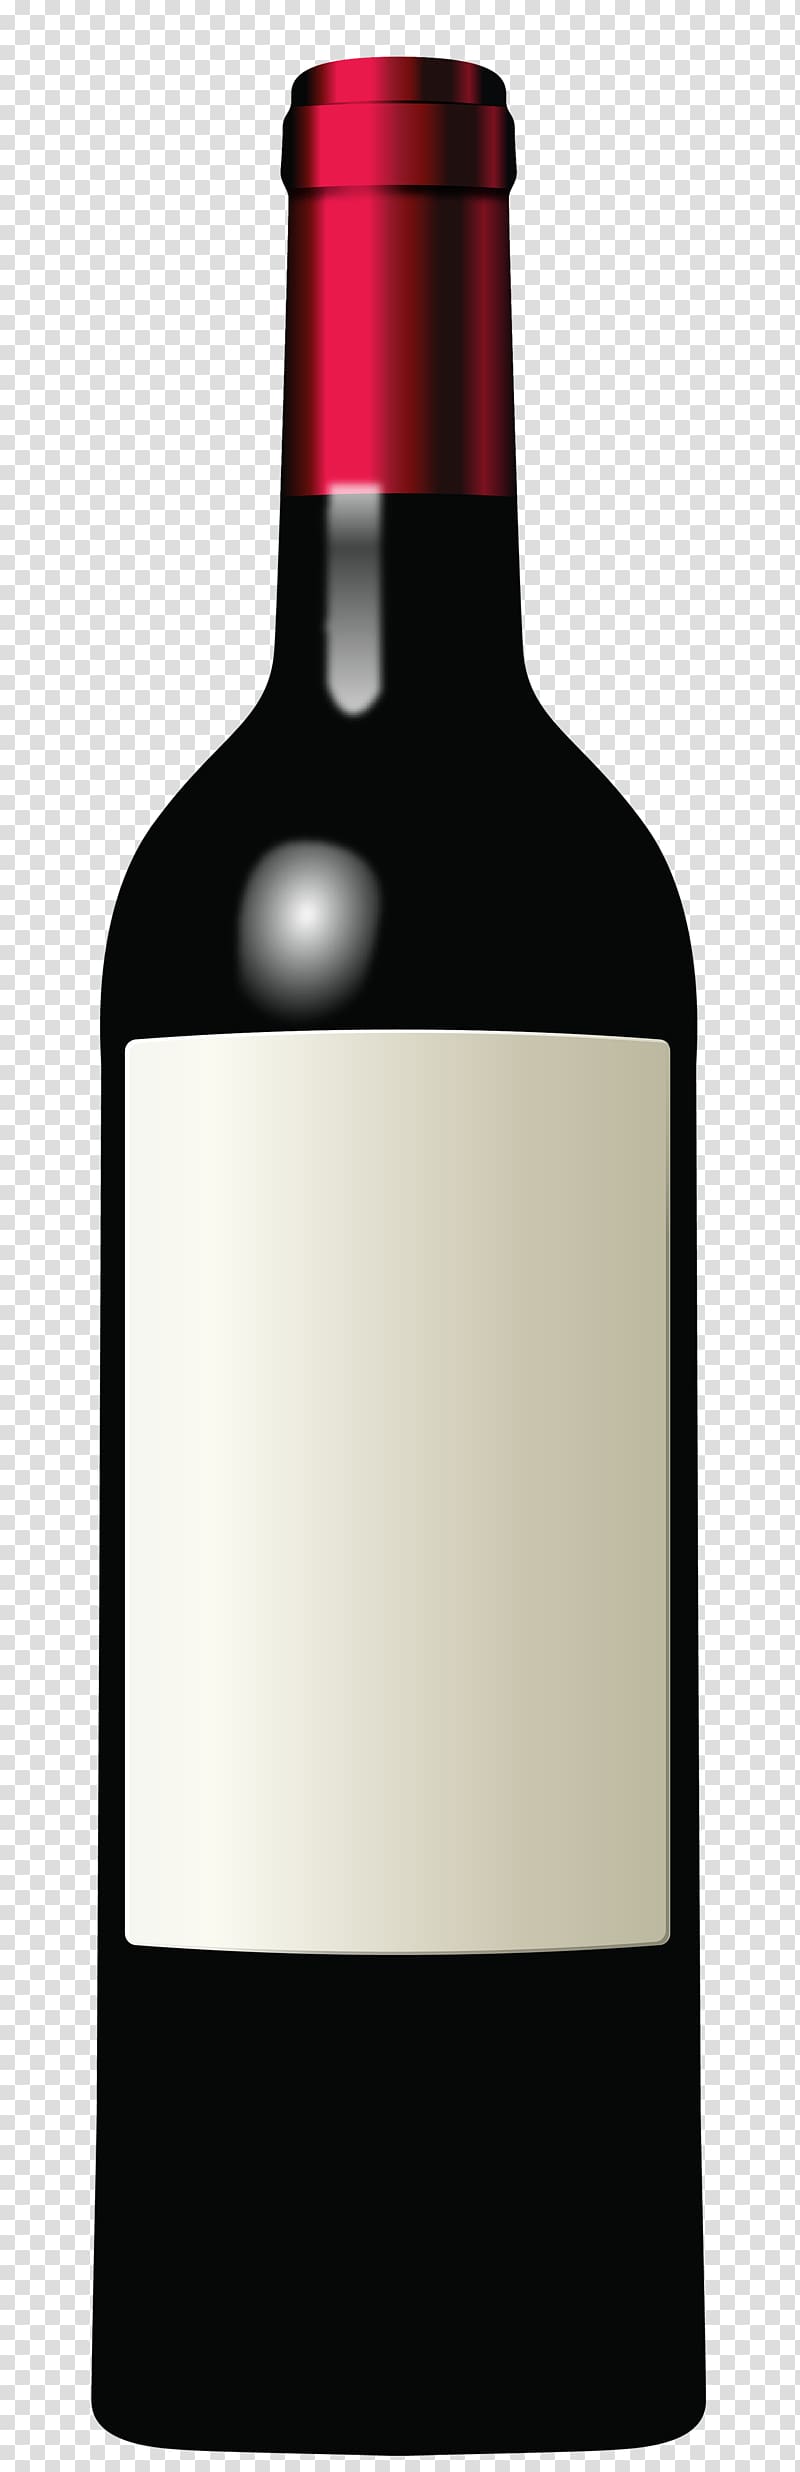 Red Wine Champagne Bottle, Bottle 7 transparent background PNG clipart